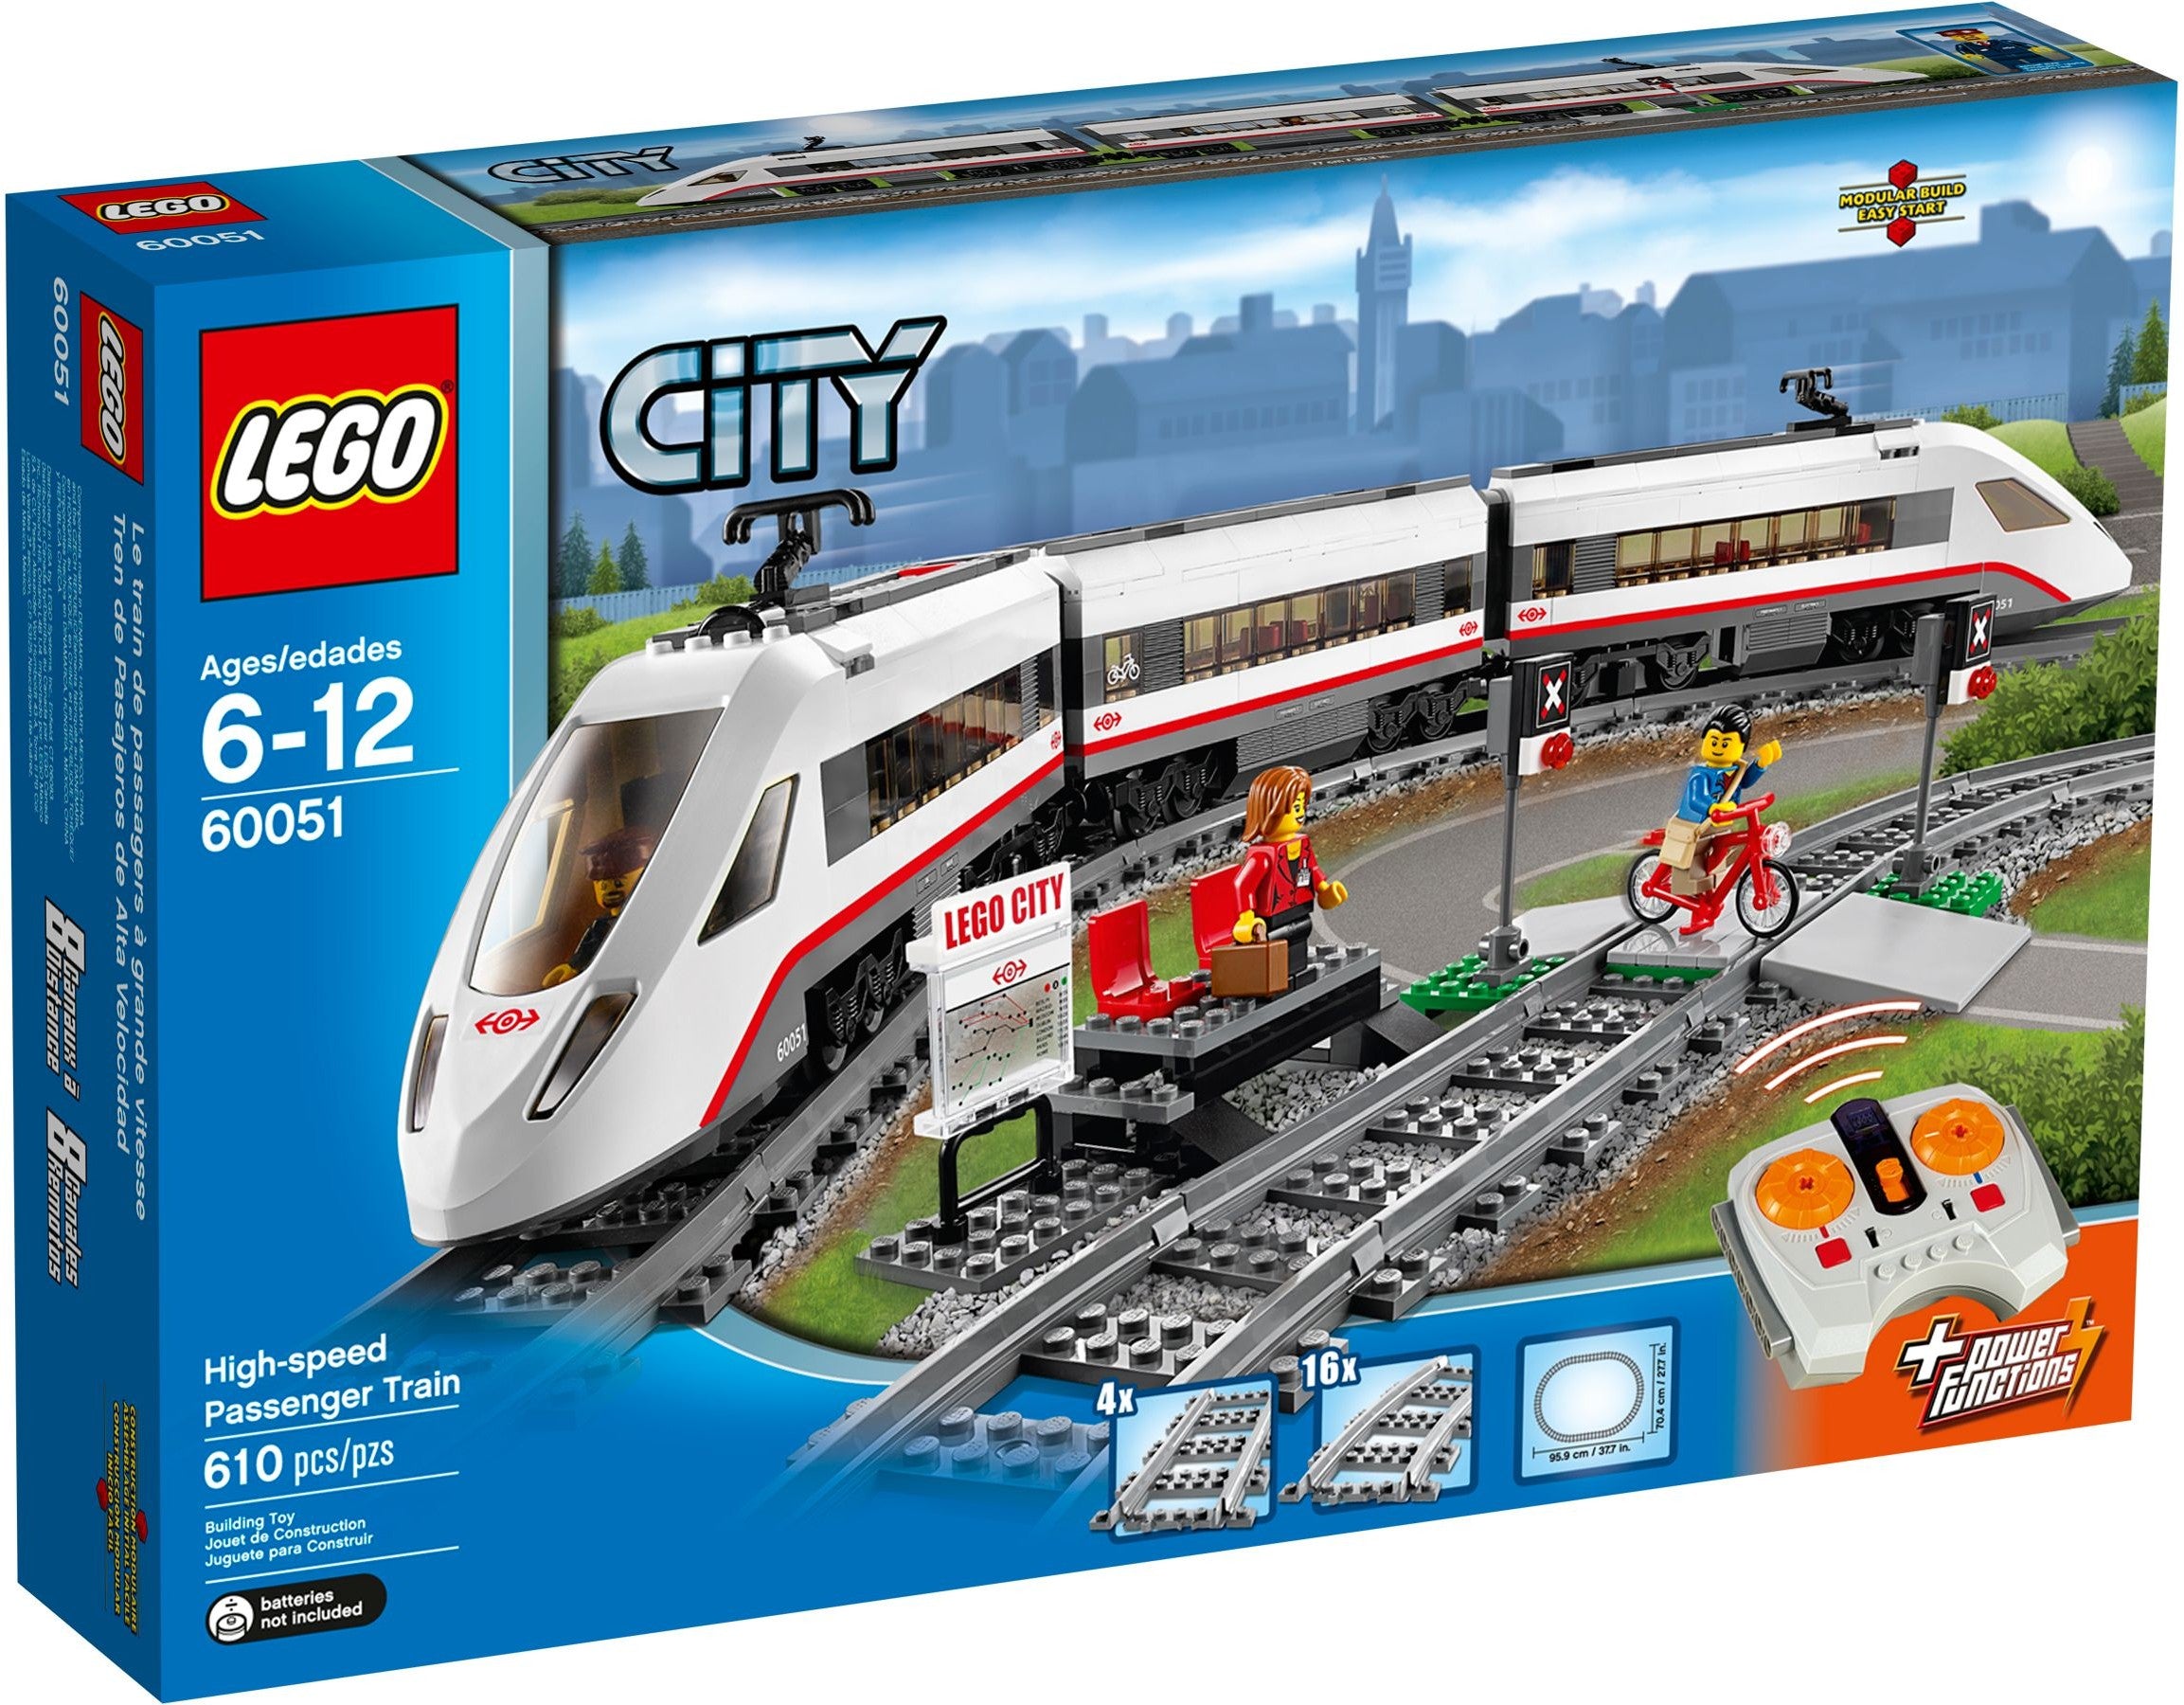 Lego City 60051 - High-speed Passenger Train